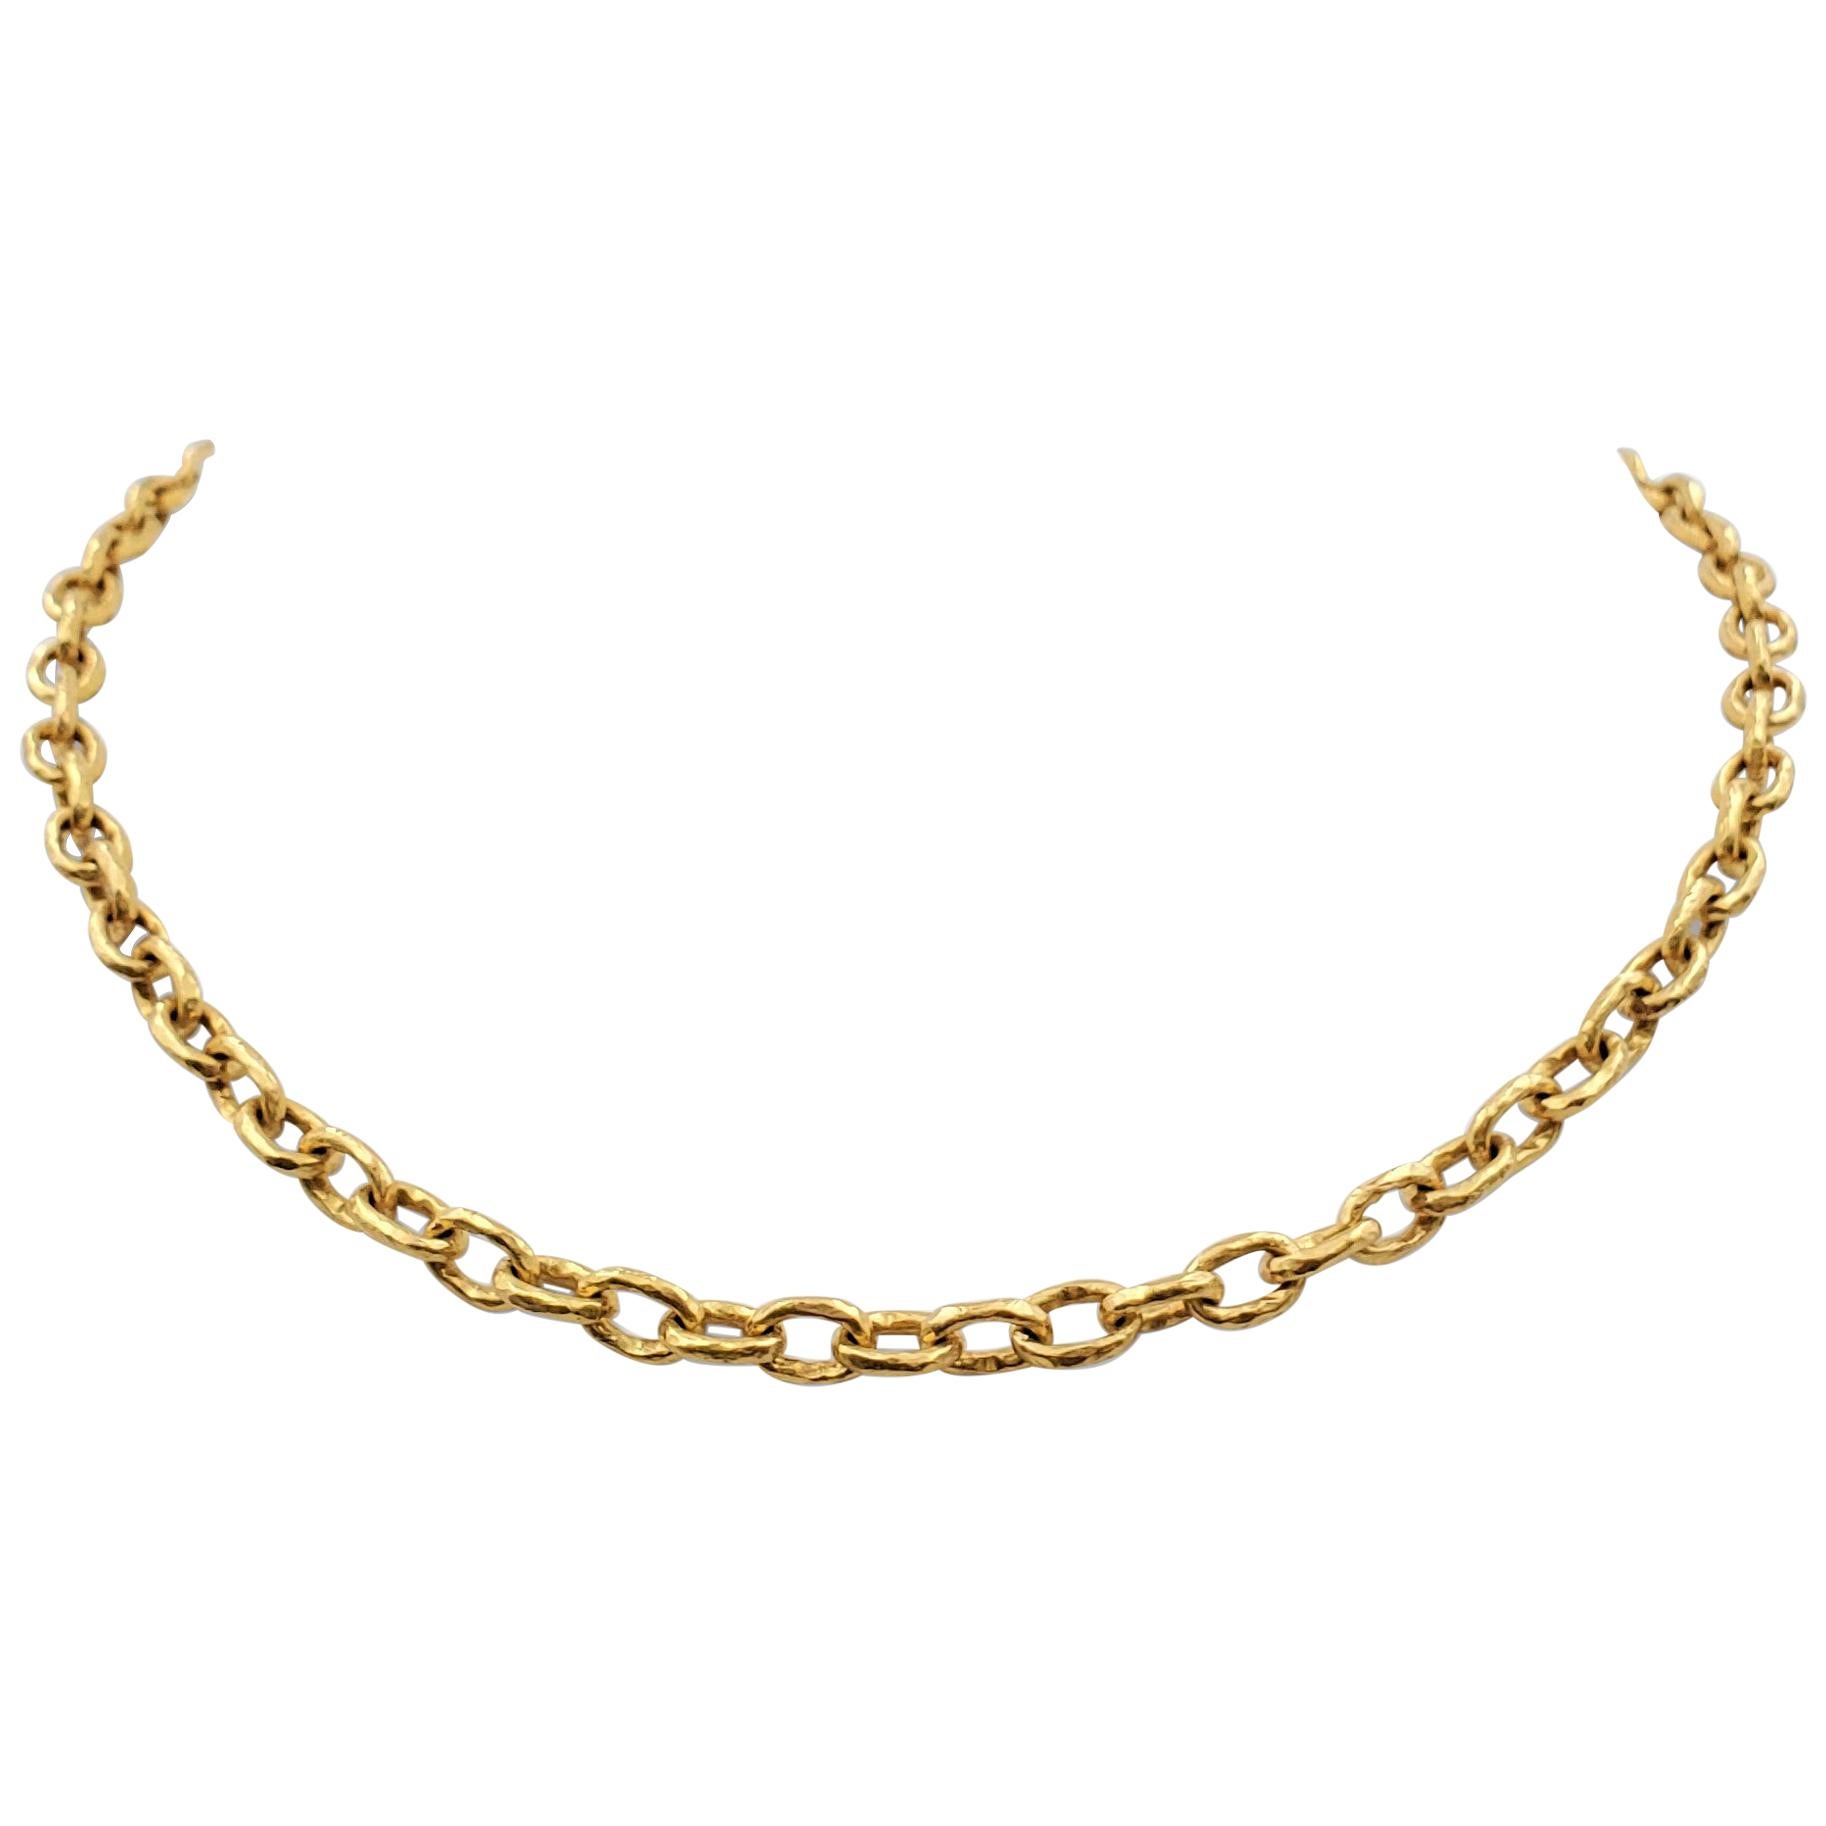 Elizabeth Locke 'Orvieto' Hammered Link Necklace